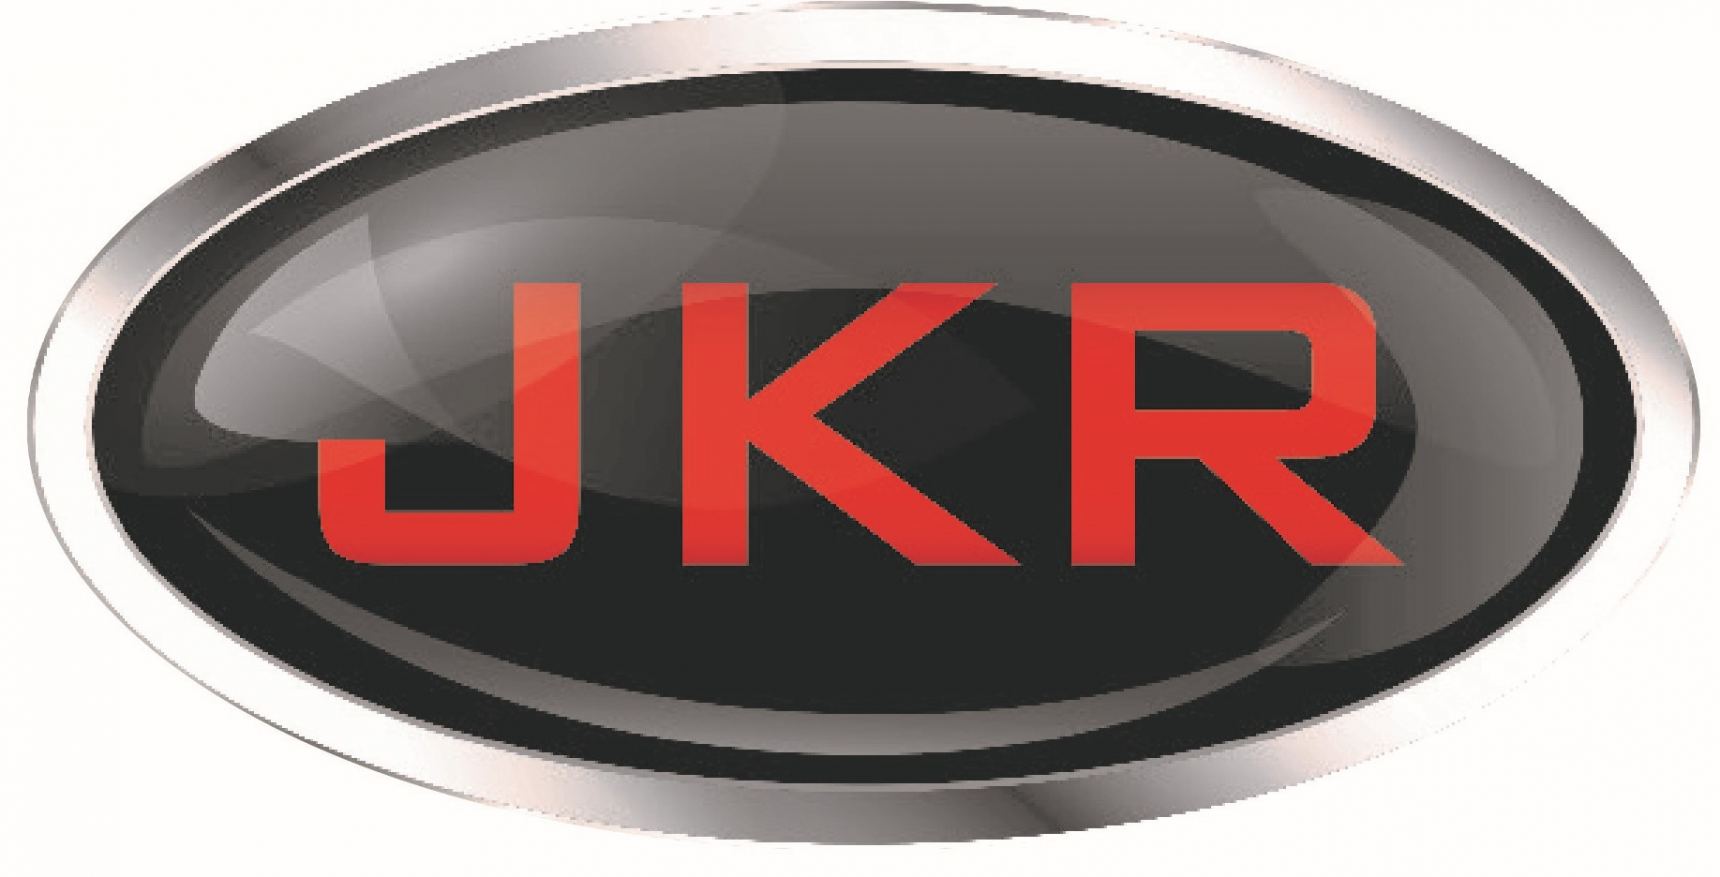 JKR Advertising & Marketing Logo